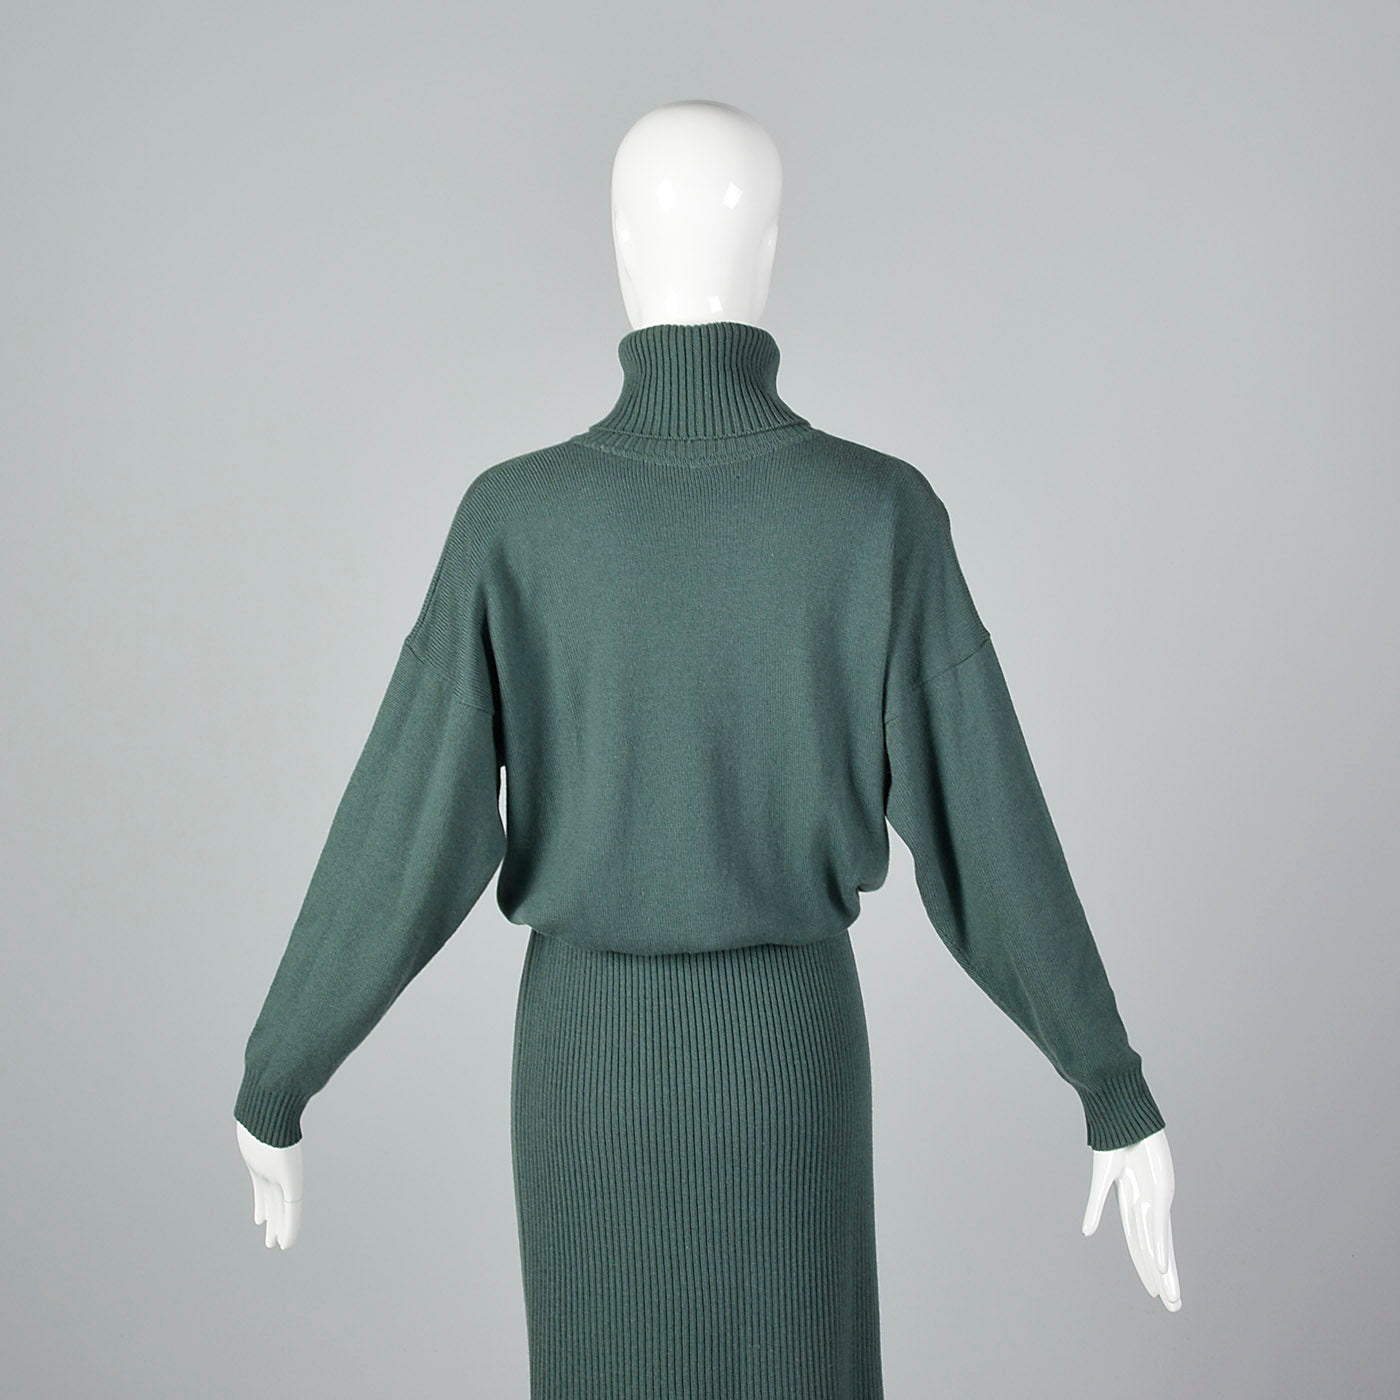 1980s Sage Green Cashmere Dress